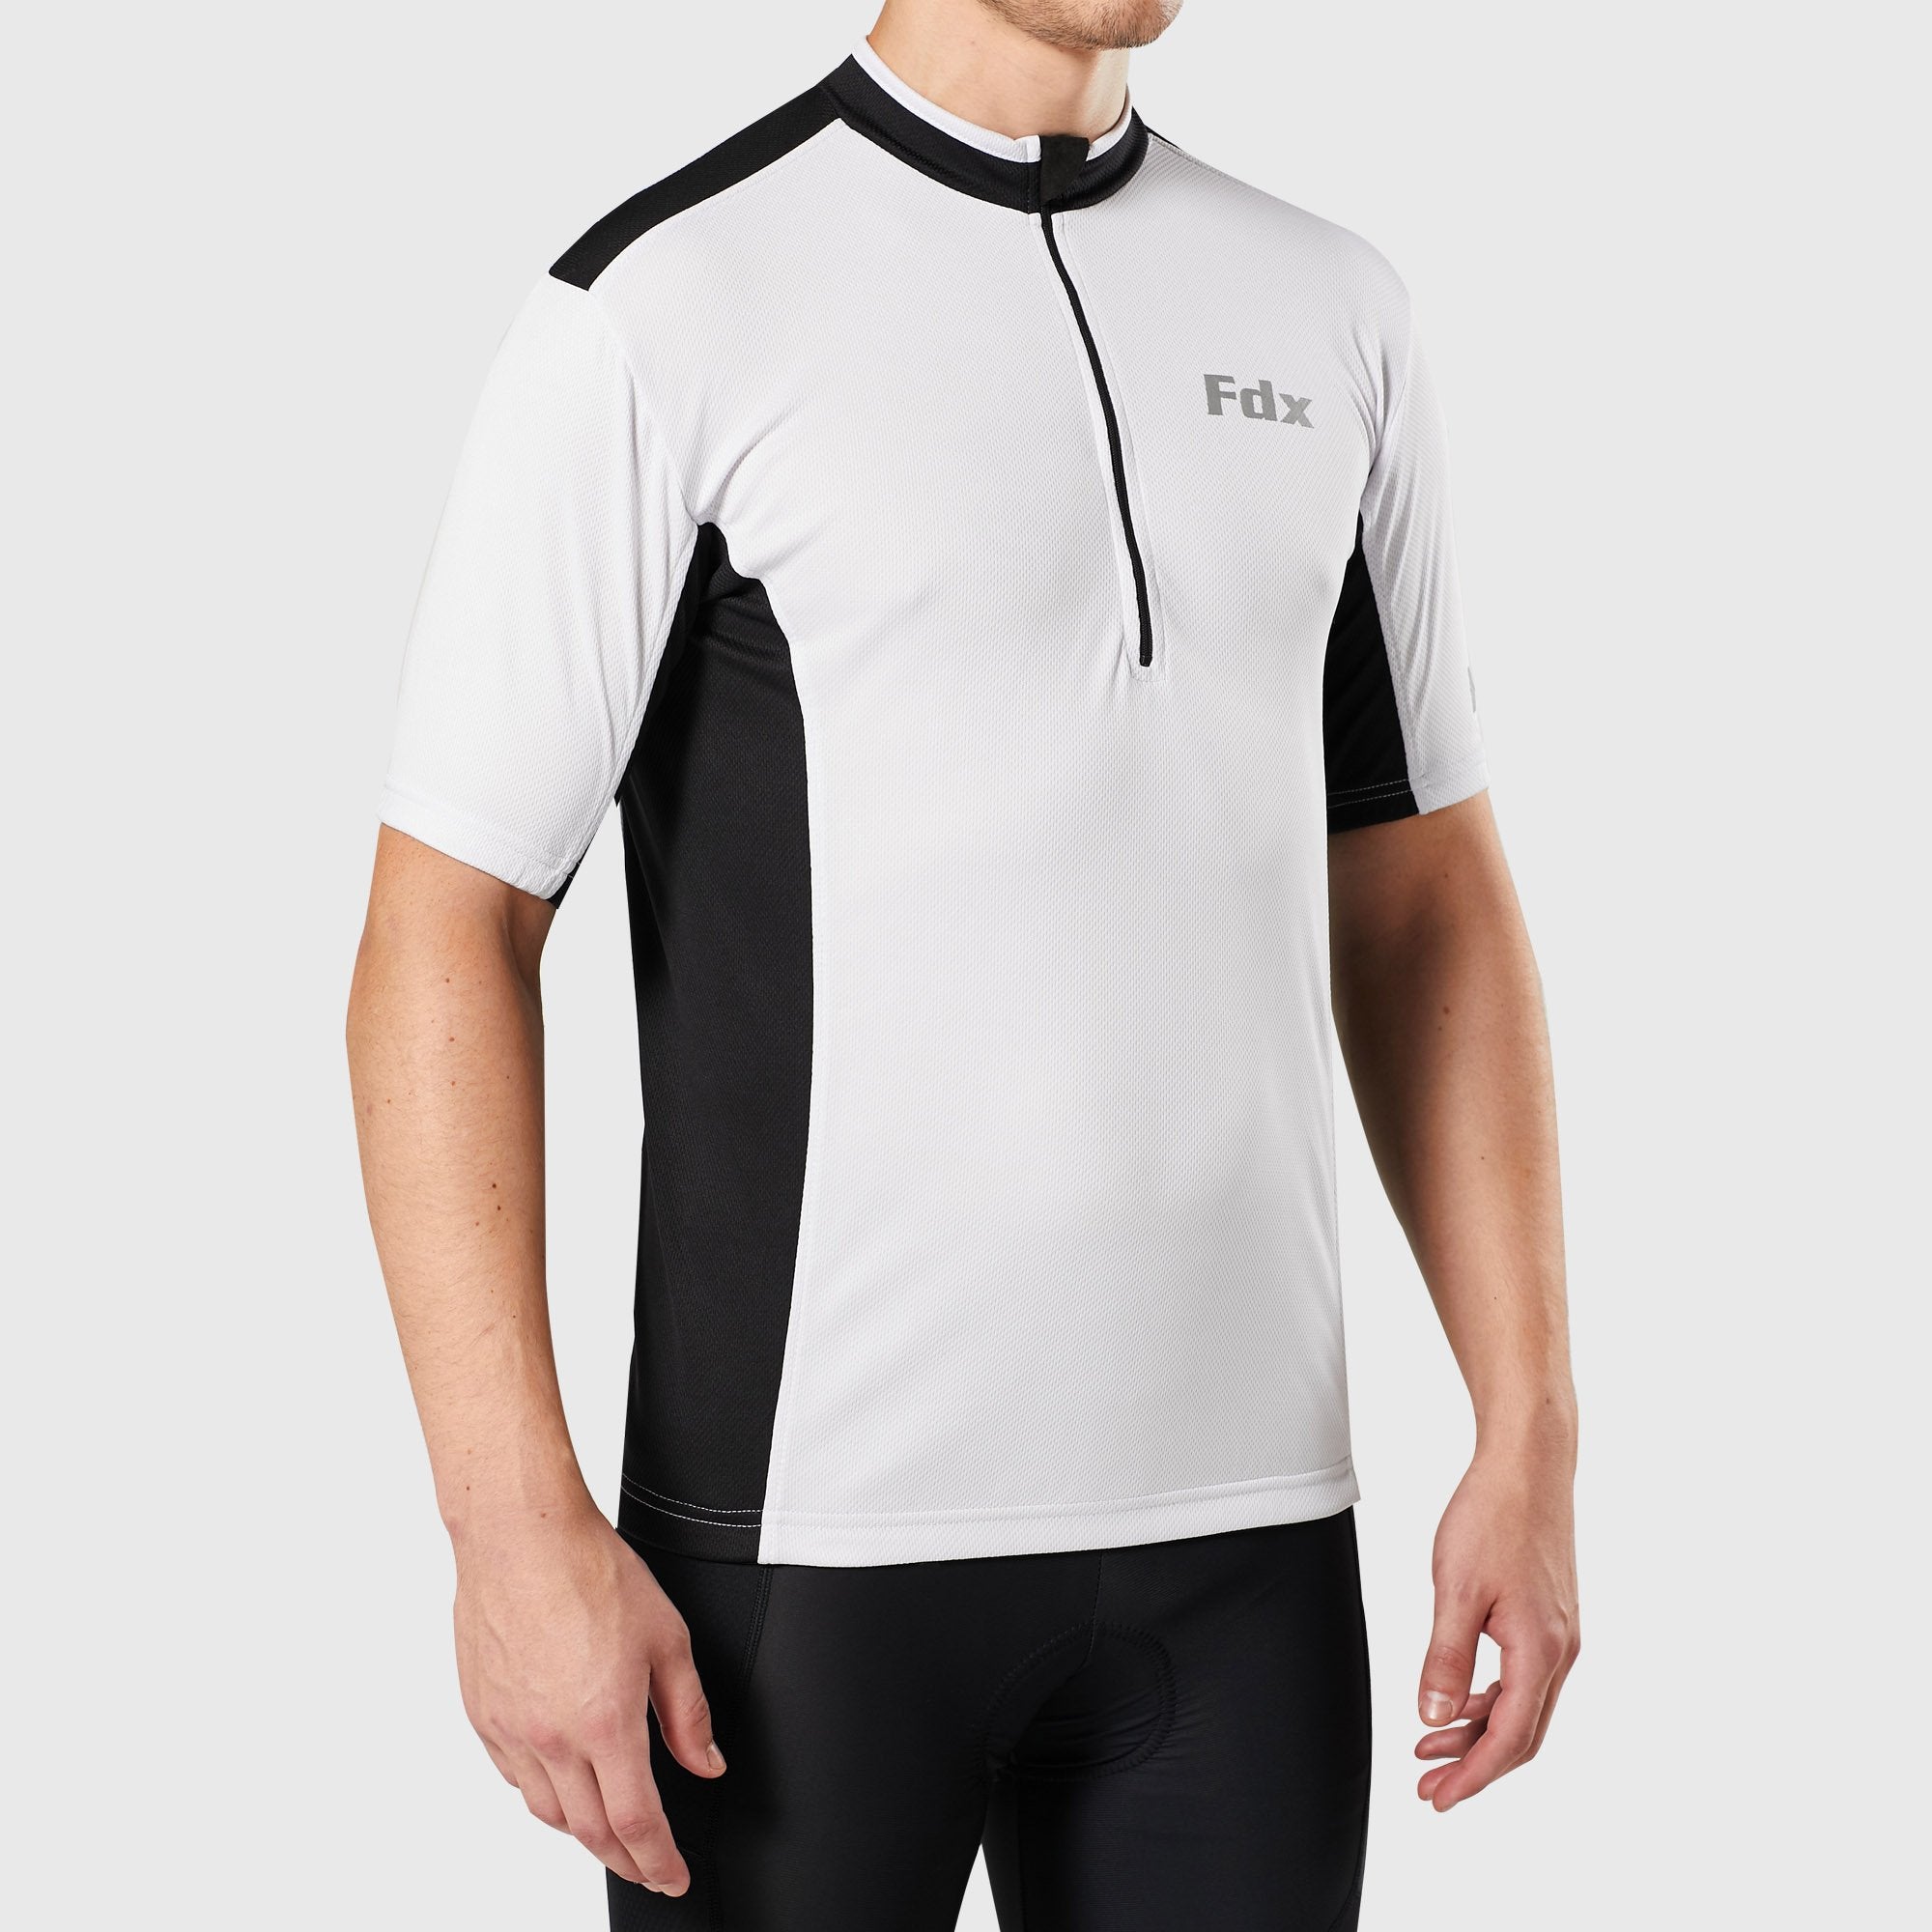 Fdx Vertex White Men's Short Sleeve Summer Cycling Jersey